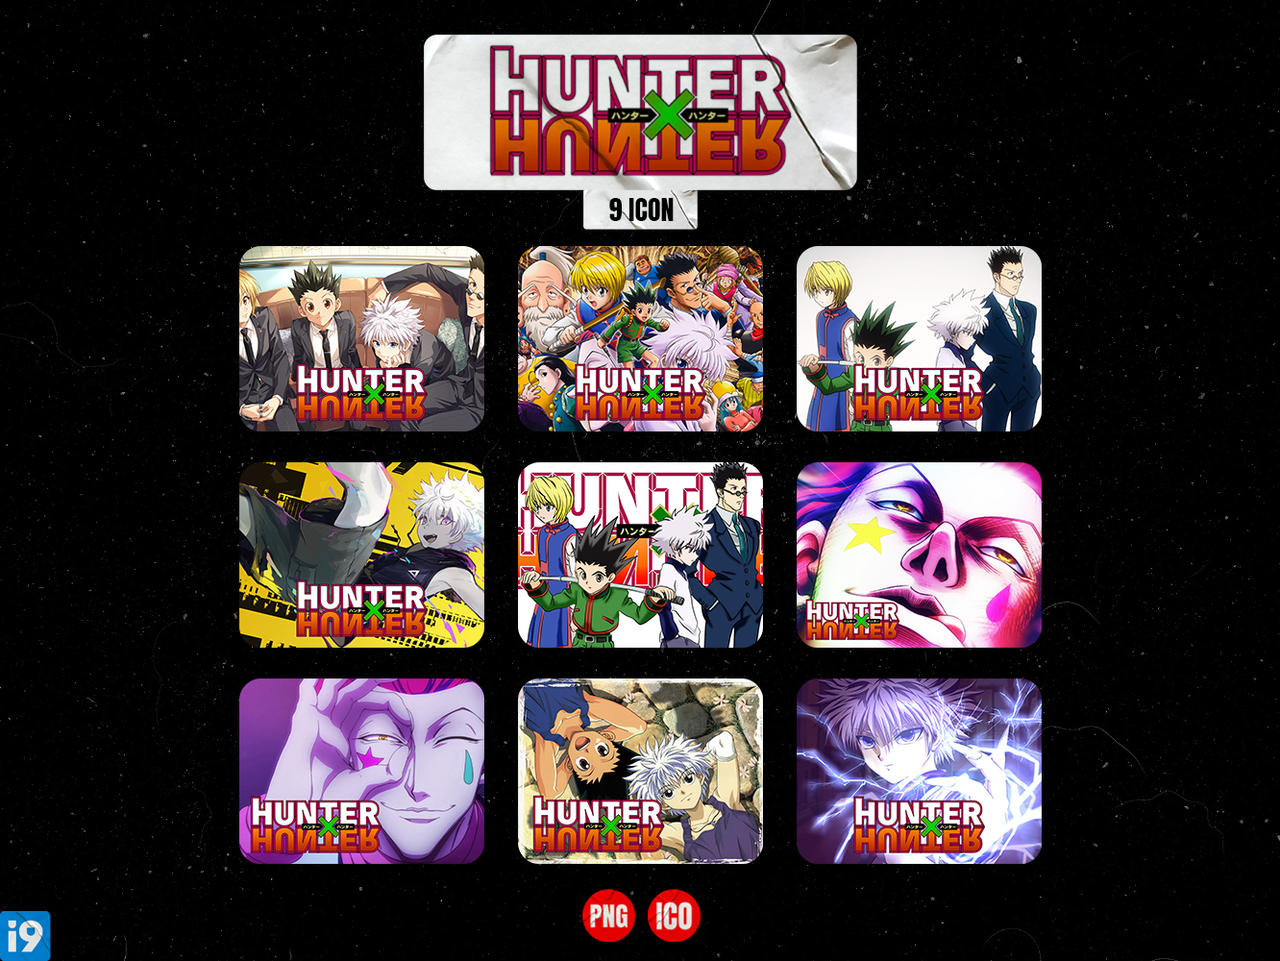 Hunter x Hunter Season Folder Icons by theiconiclady on DeviantArt